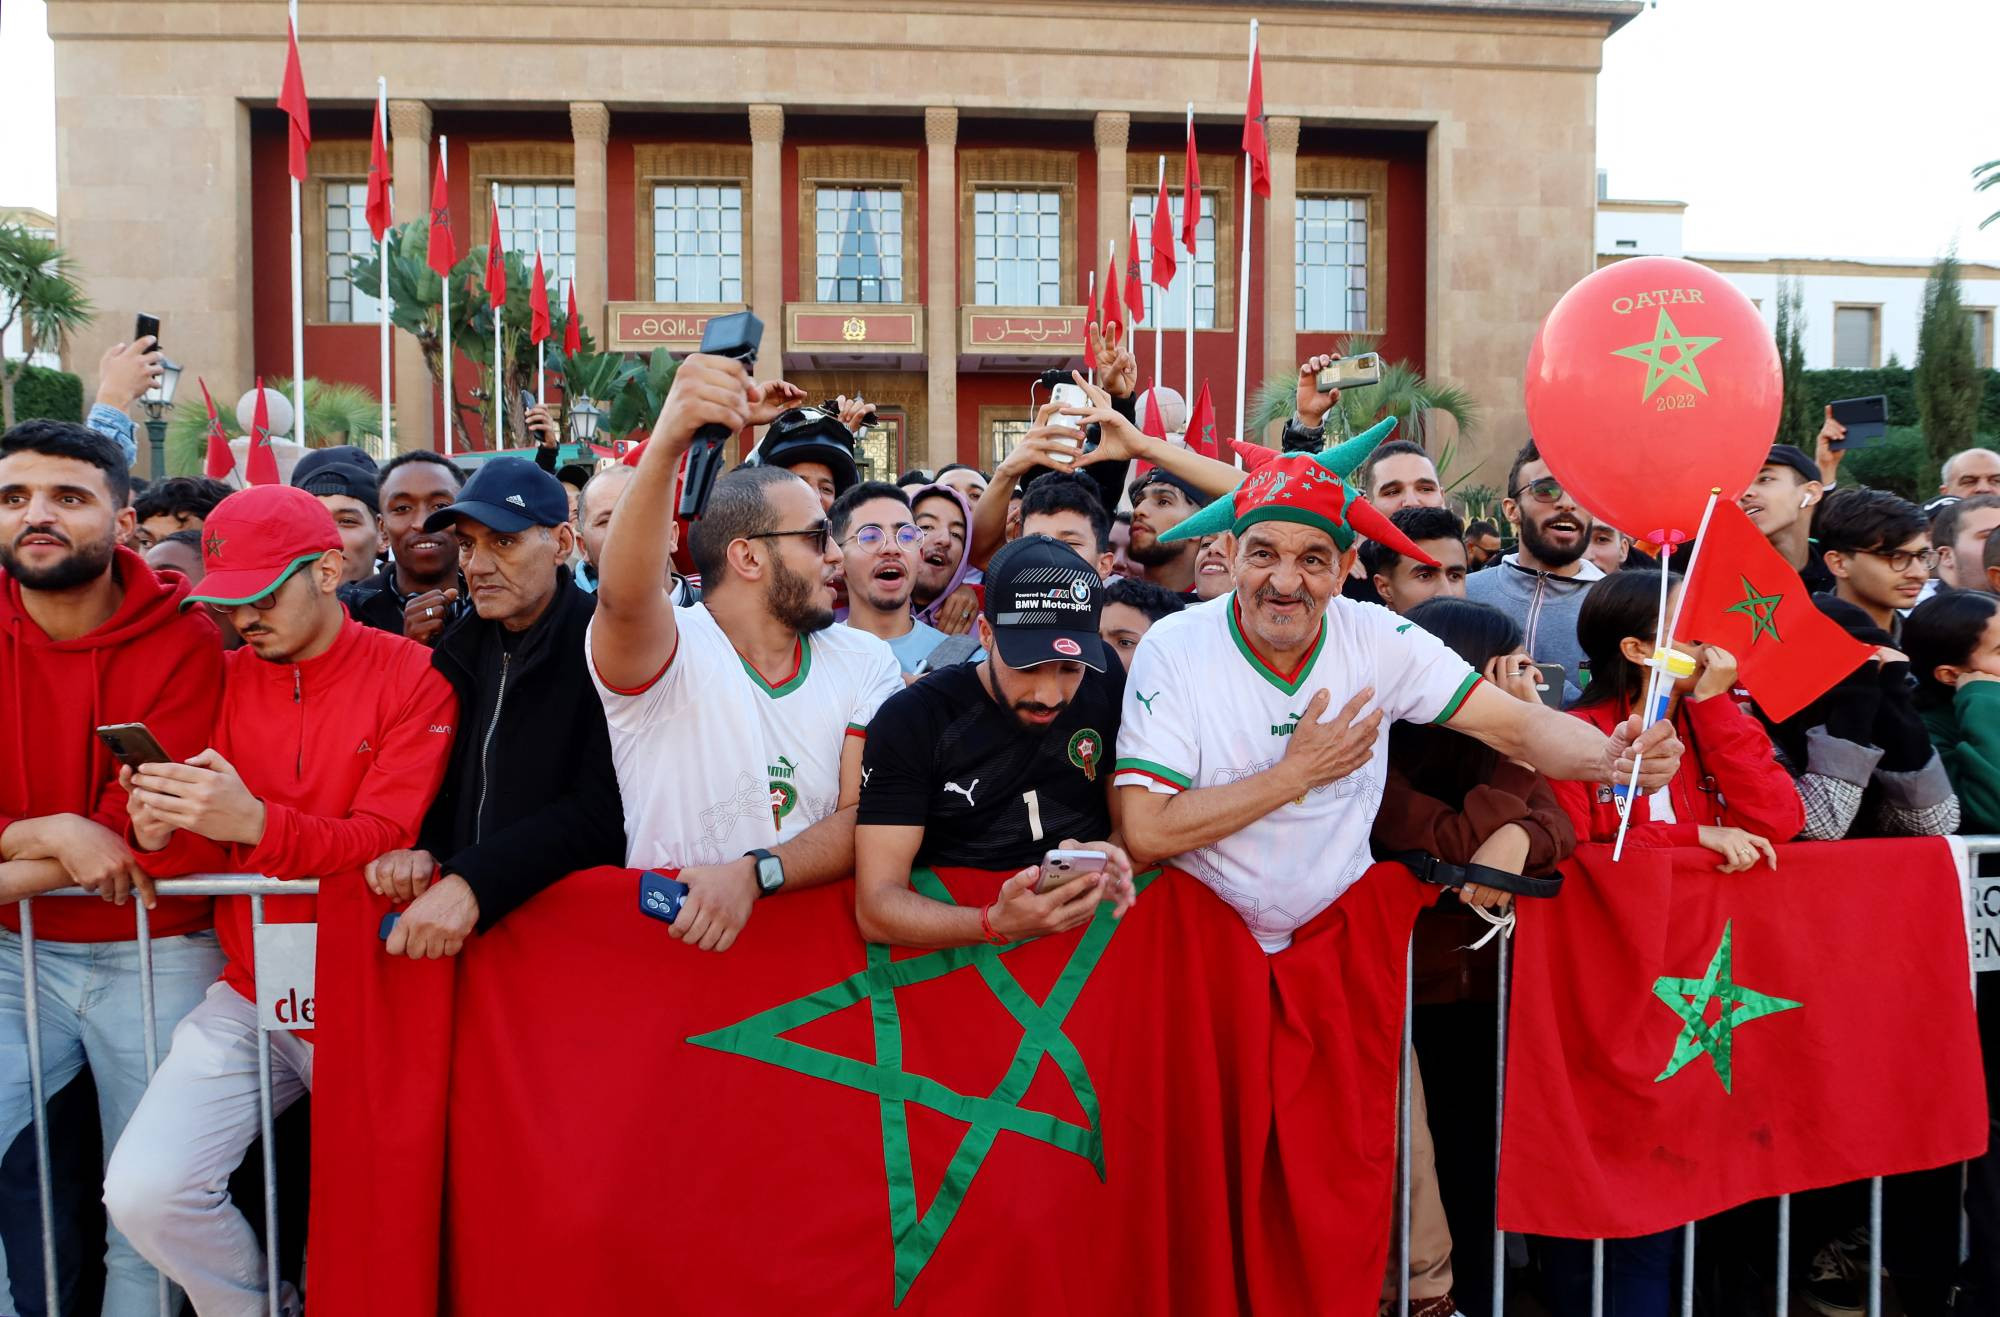 Morocco joining 2030 World Cup bid